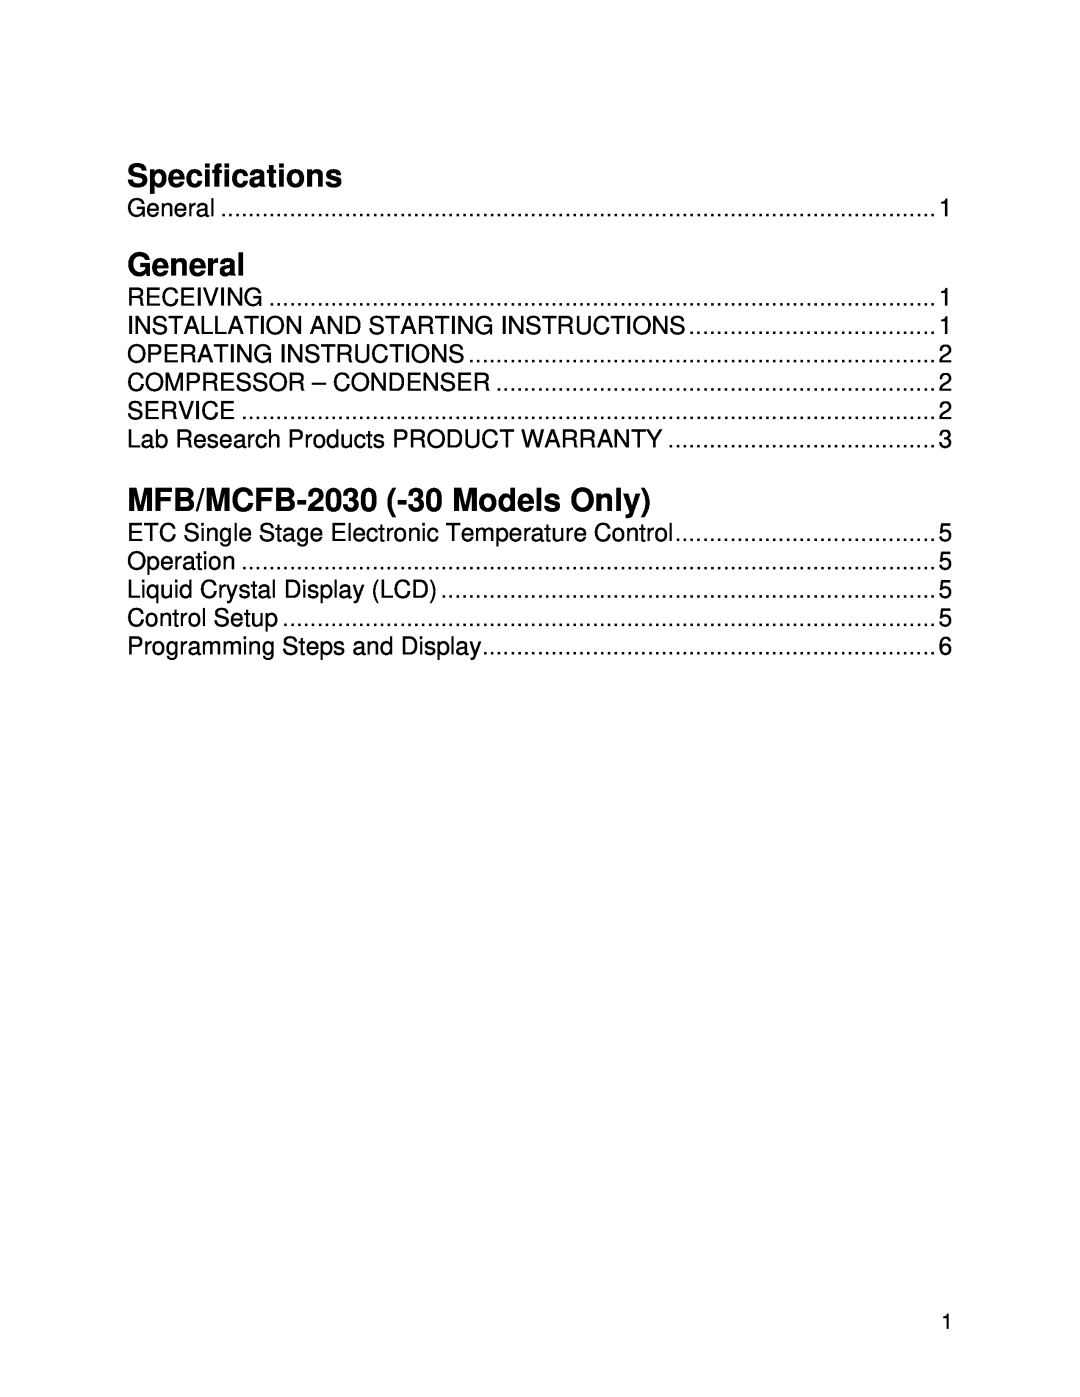 Aprilaire MFB-0920, MFB-2920, MFB-2020, MCFB-2020, MFB-2030 warranty Specifications, General, MFB/MCFB-2030 -30Models Only 